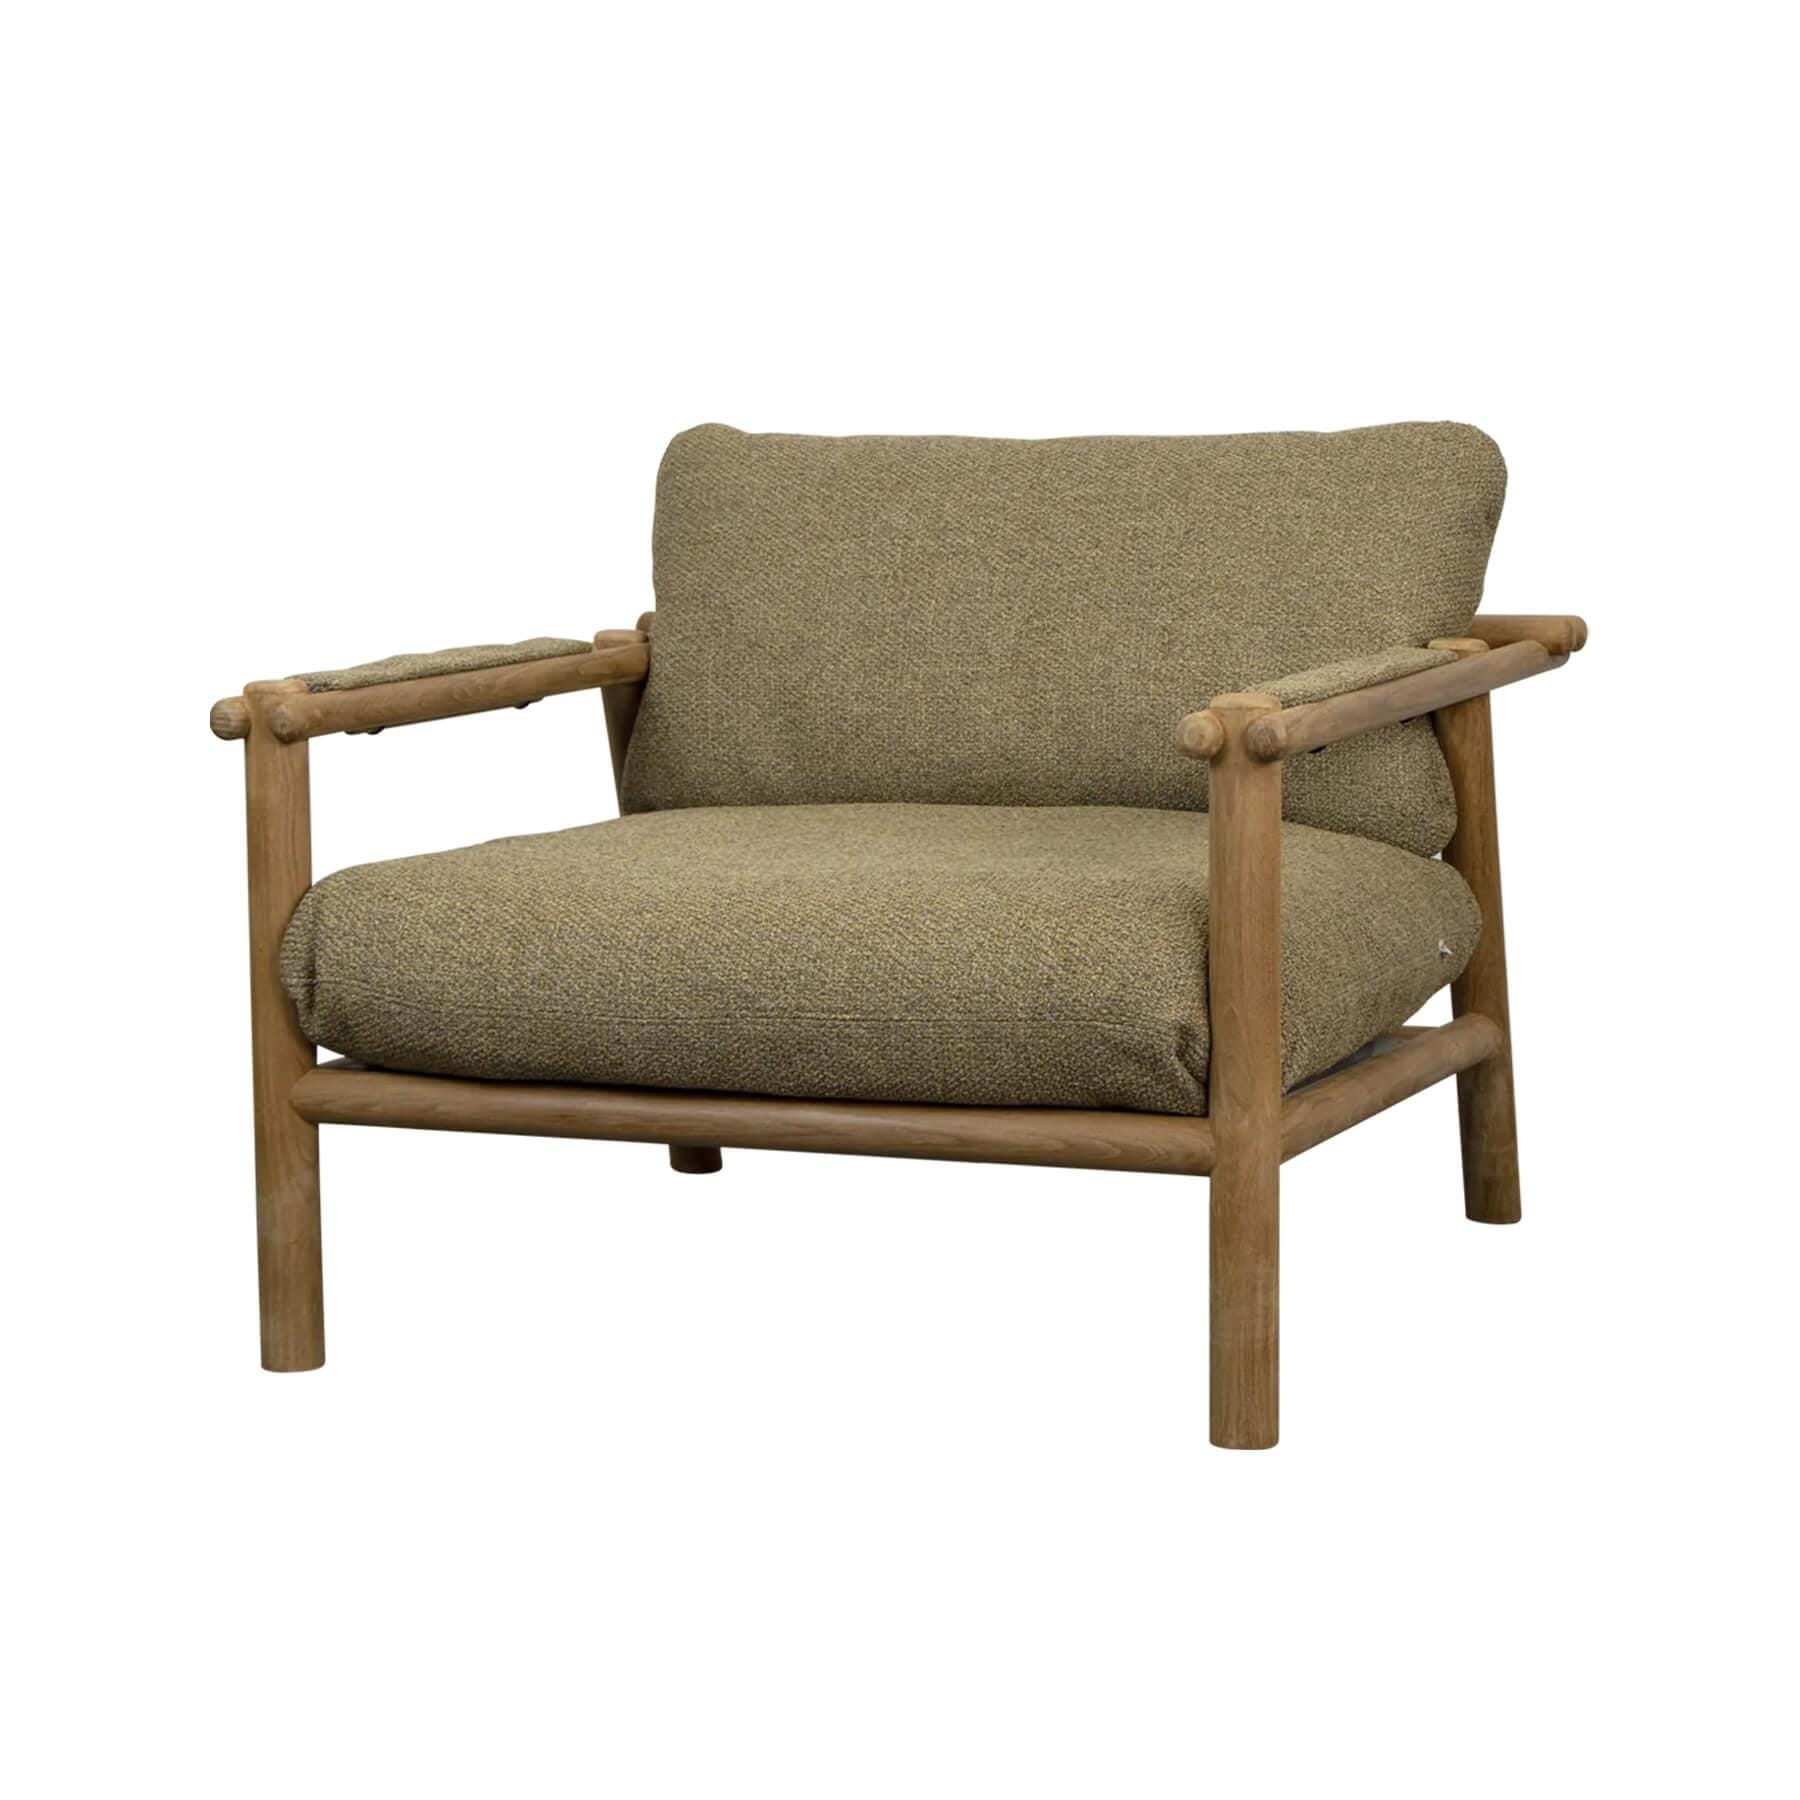 Caneline Sticks Outdoor Lounge Chair Teak Tumeric Yellow Cushion Brown